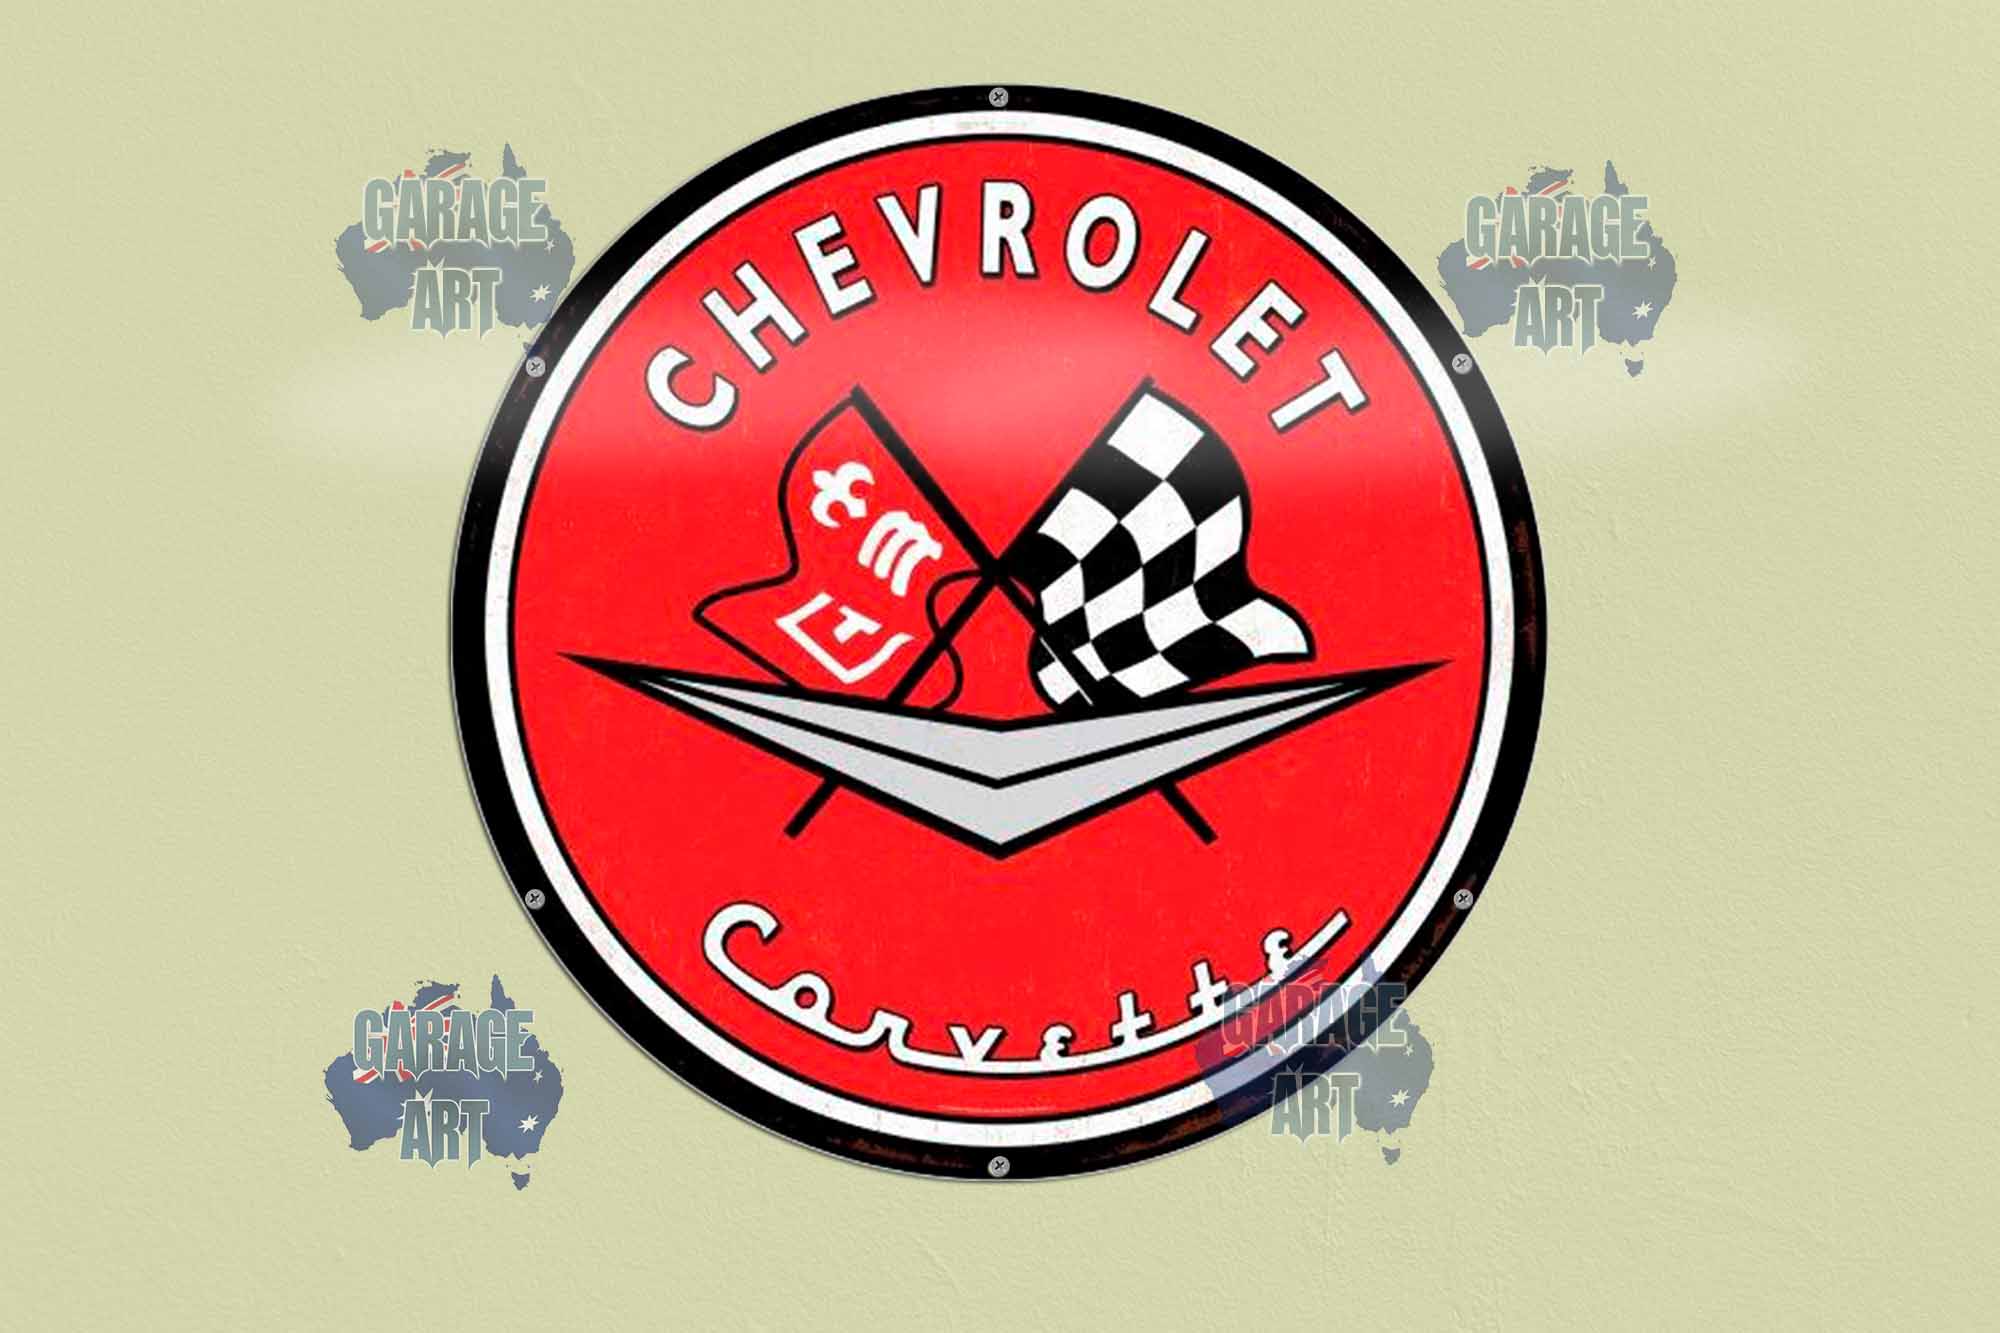 Chevrolet Corvette Red Logo 560Dia Tin Sign freeshipping - garageartaustralia